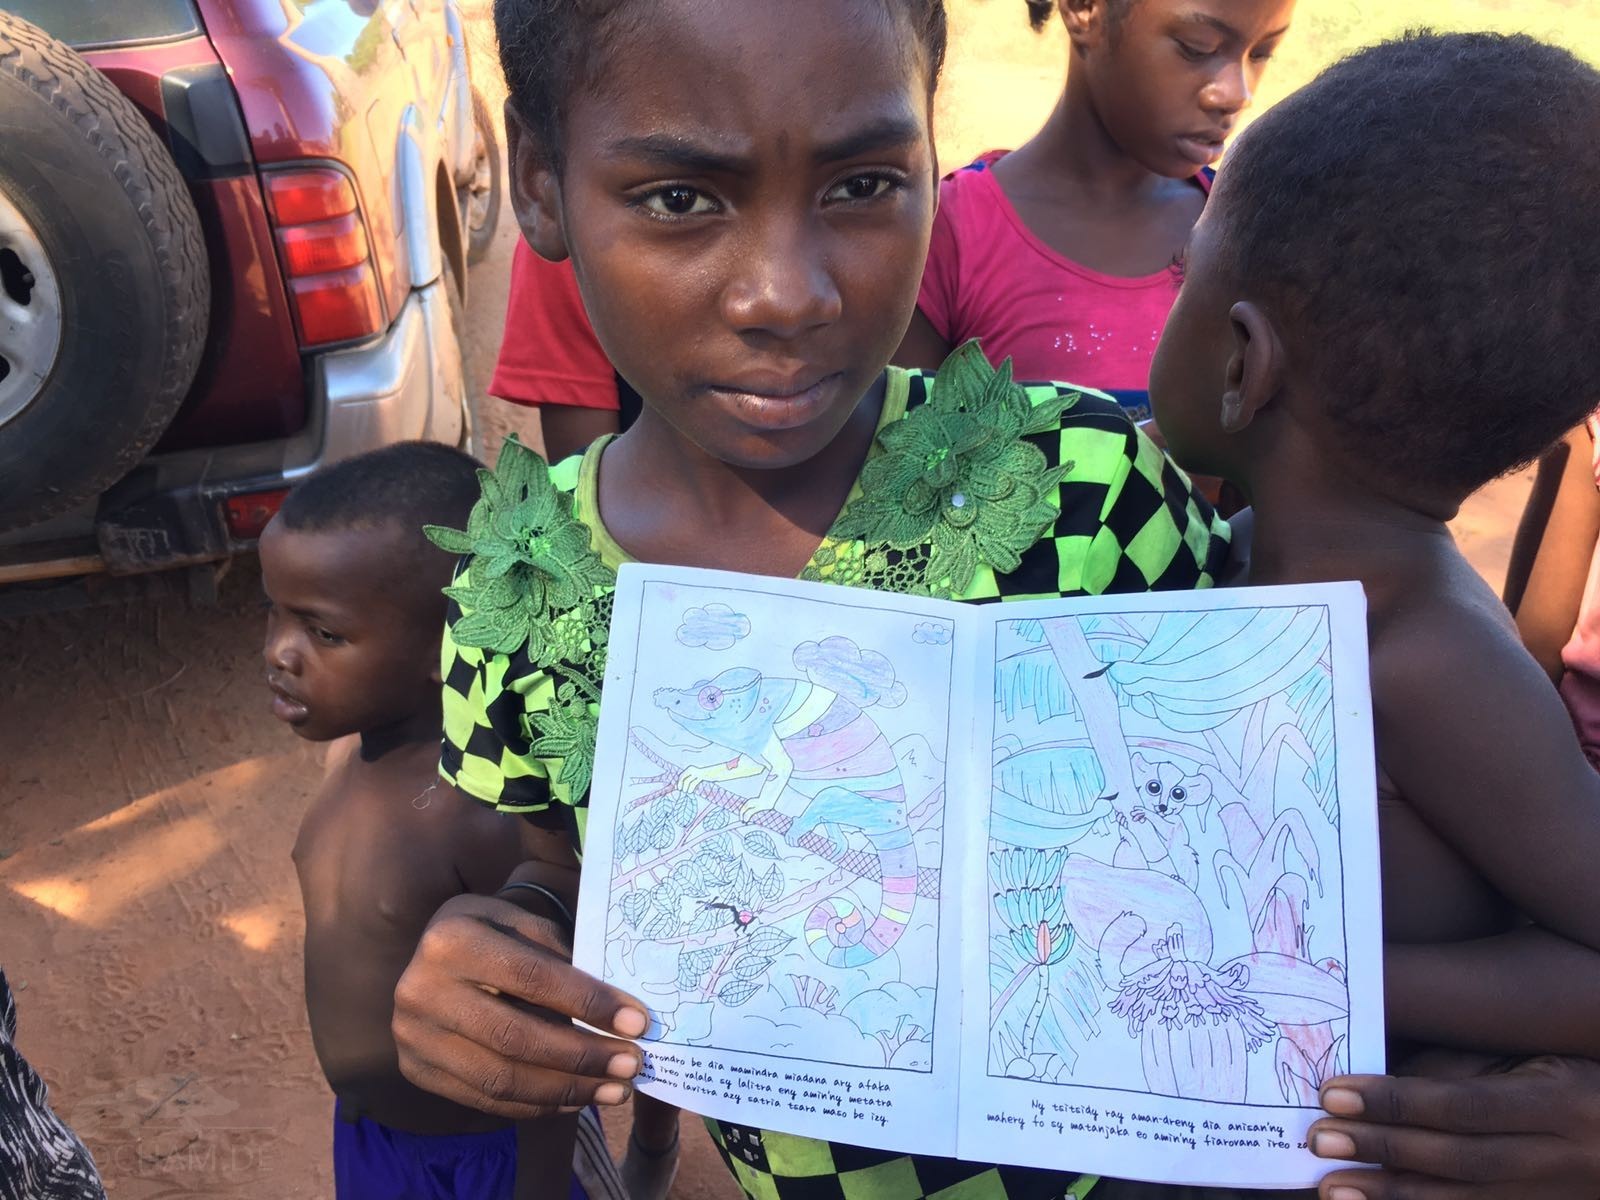 Malbücher für Madagaskar